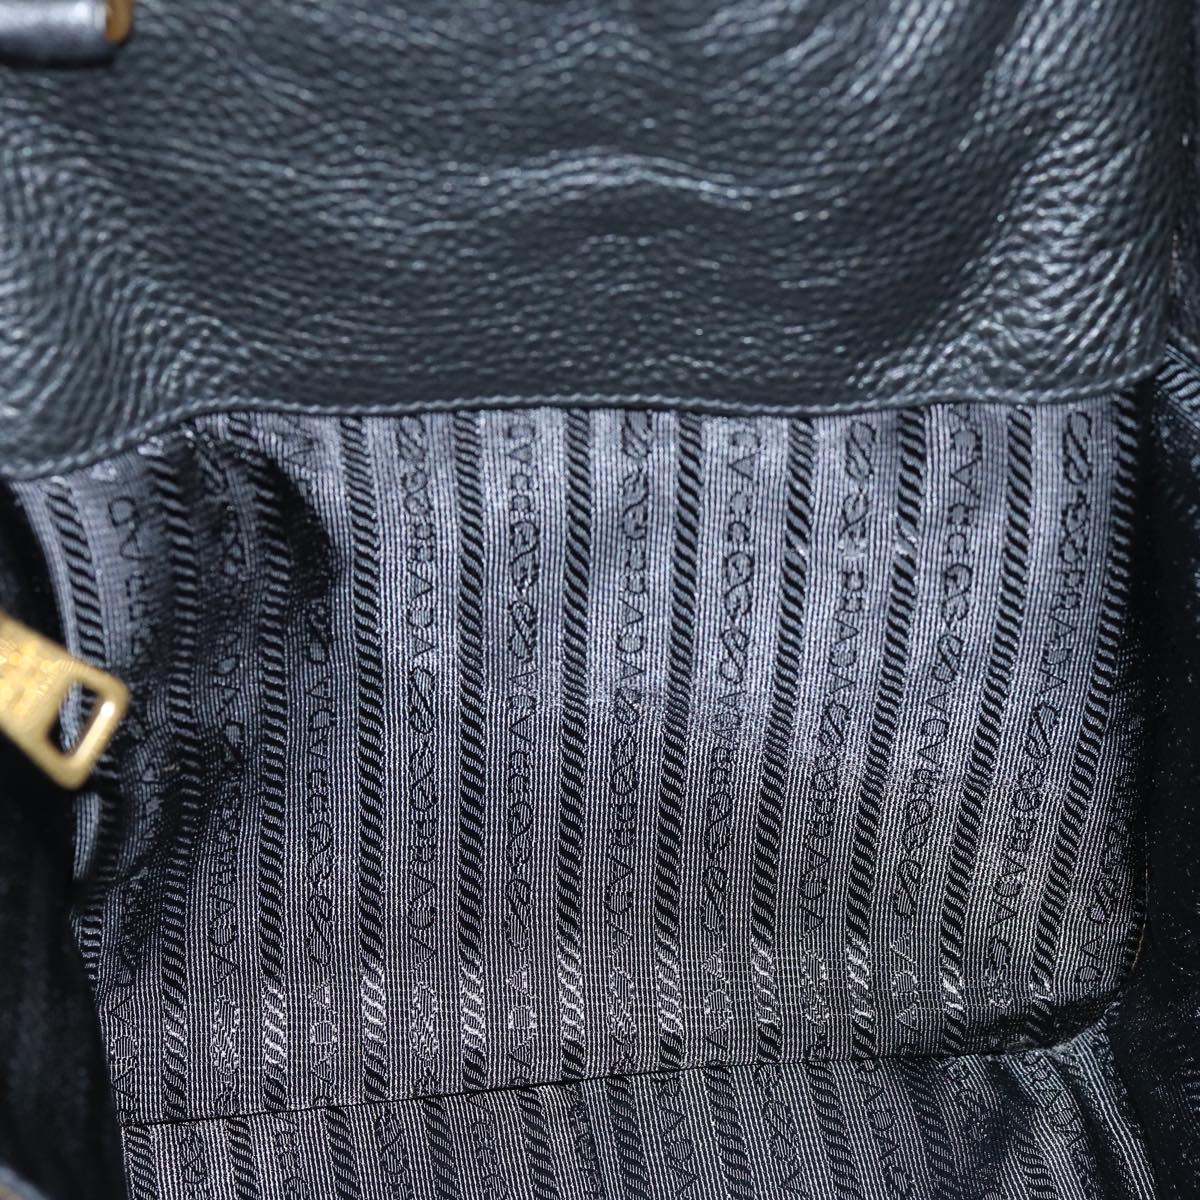 PRADA Hand Bag Leather 2way Black BN2626 Auth am6177A